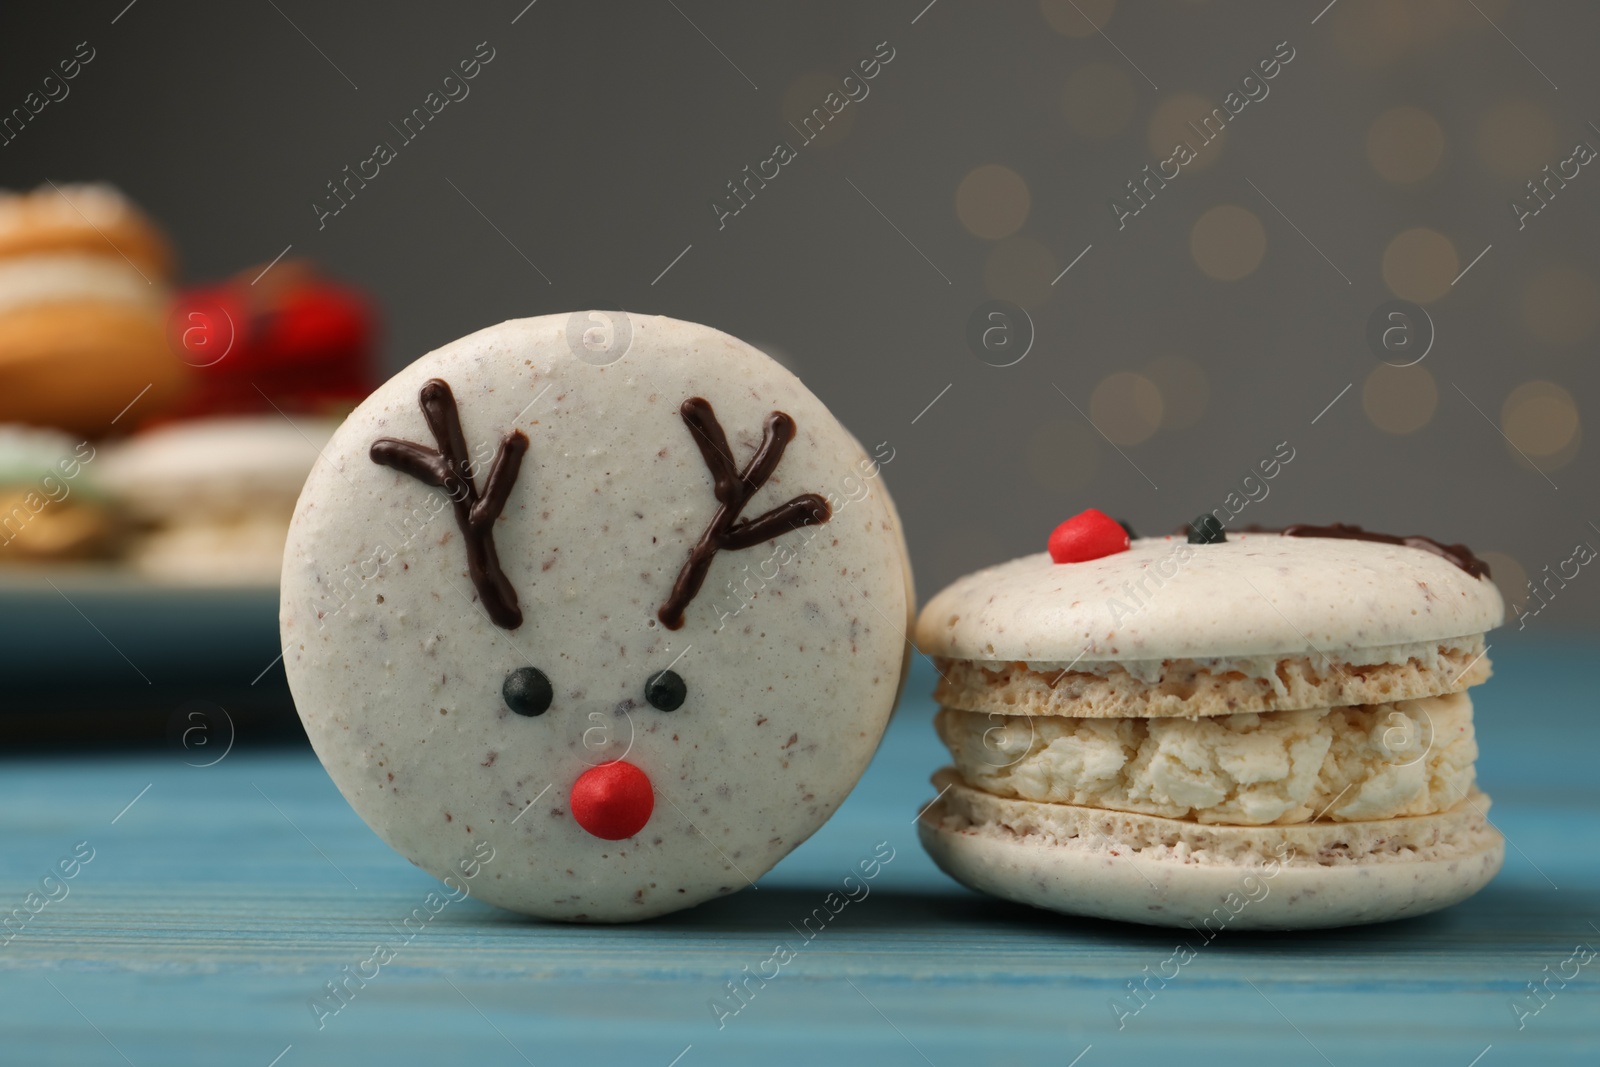 Photo of Tasty reindeer Christmas macarons on light blue wooden table against blurred festive lights